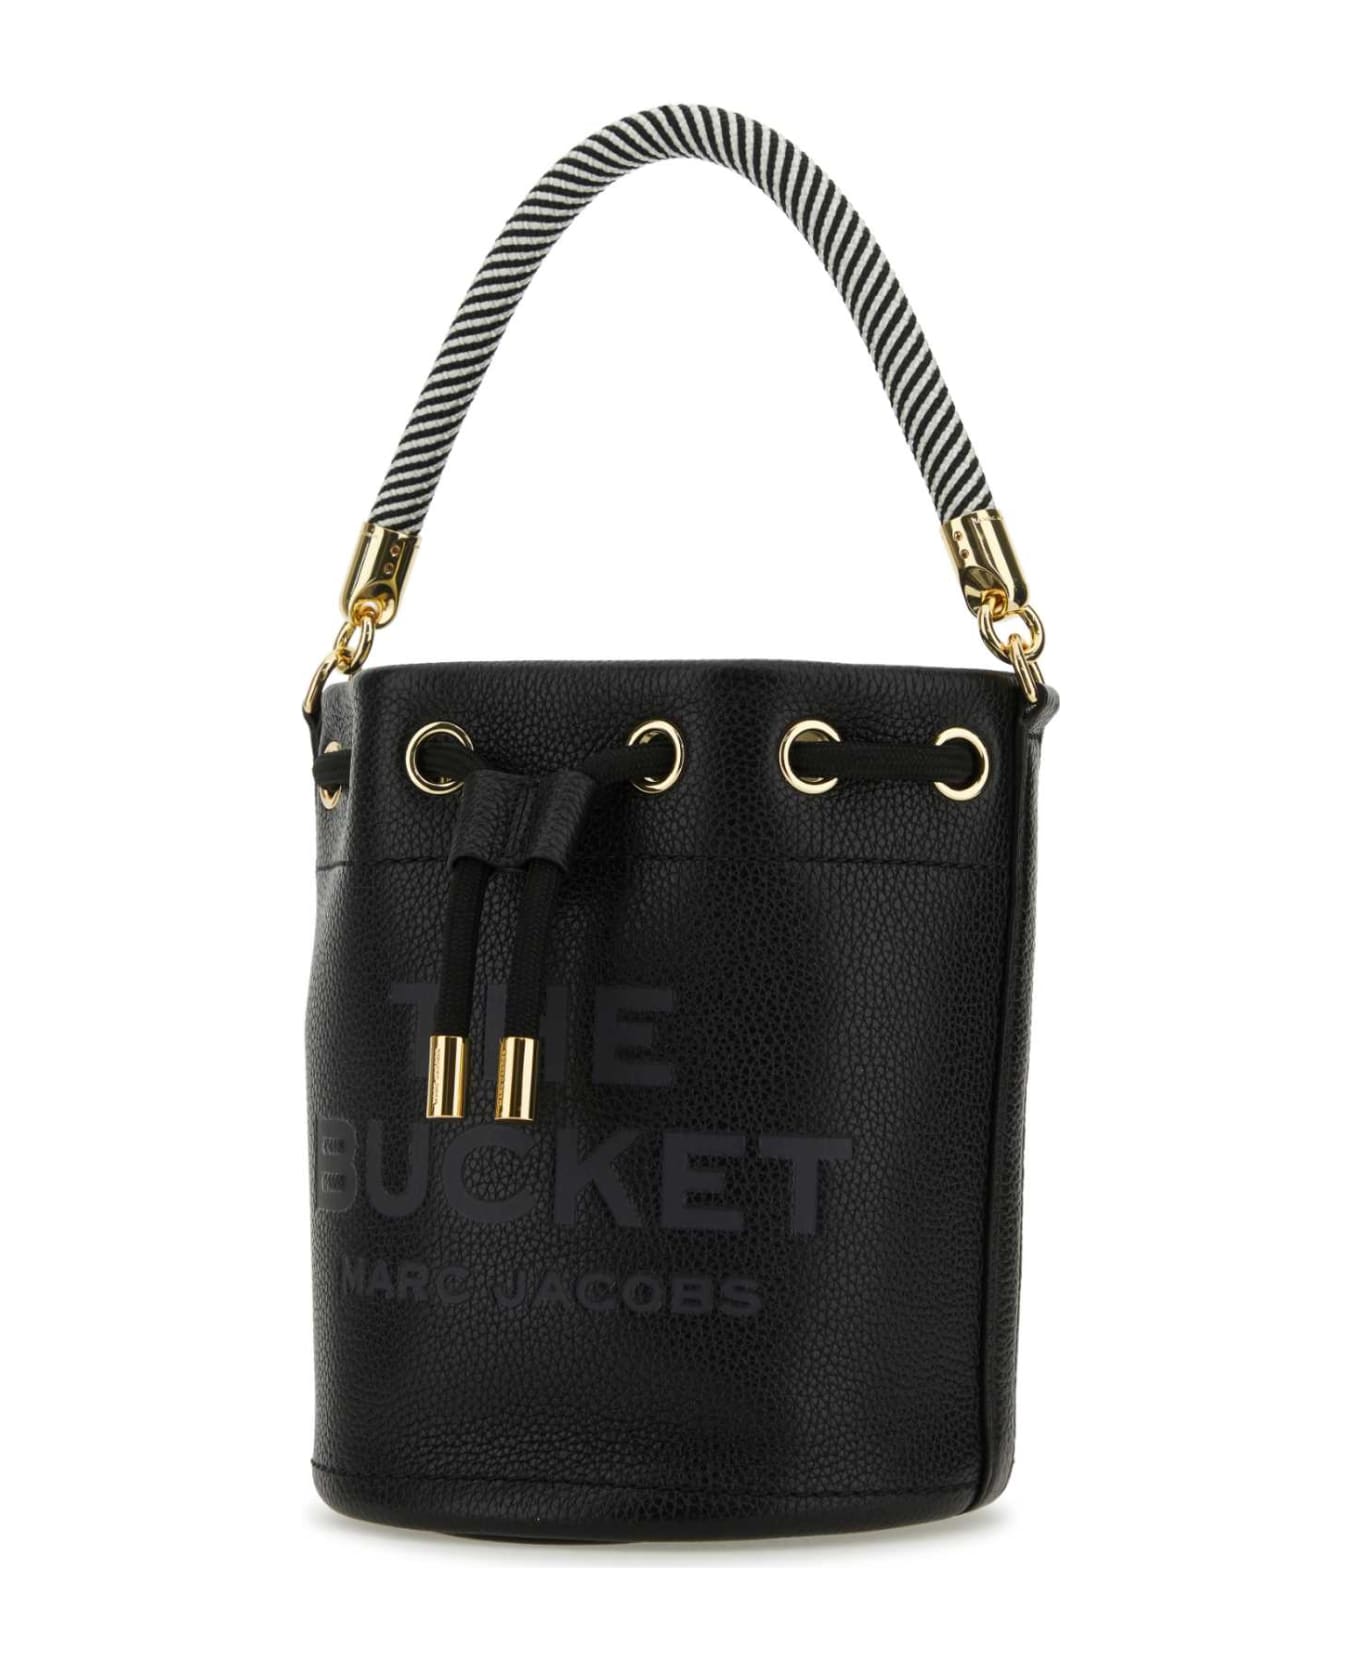 Marc Jacobs Black Leather The Bucket Bucket Bag - 001